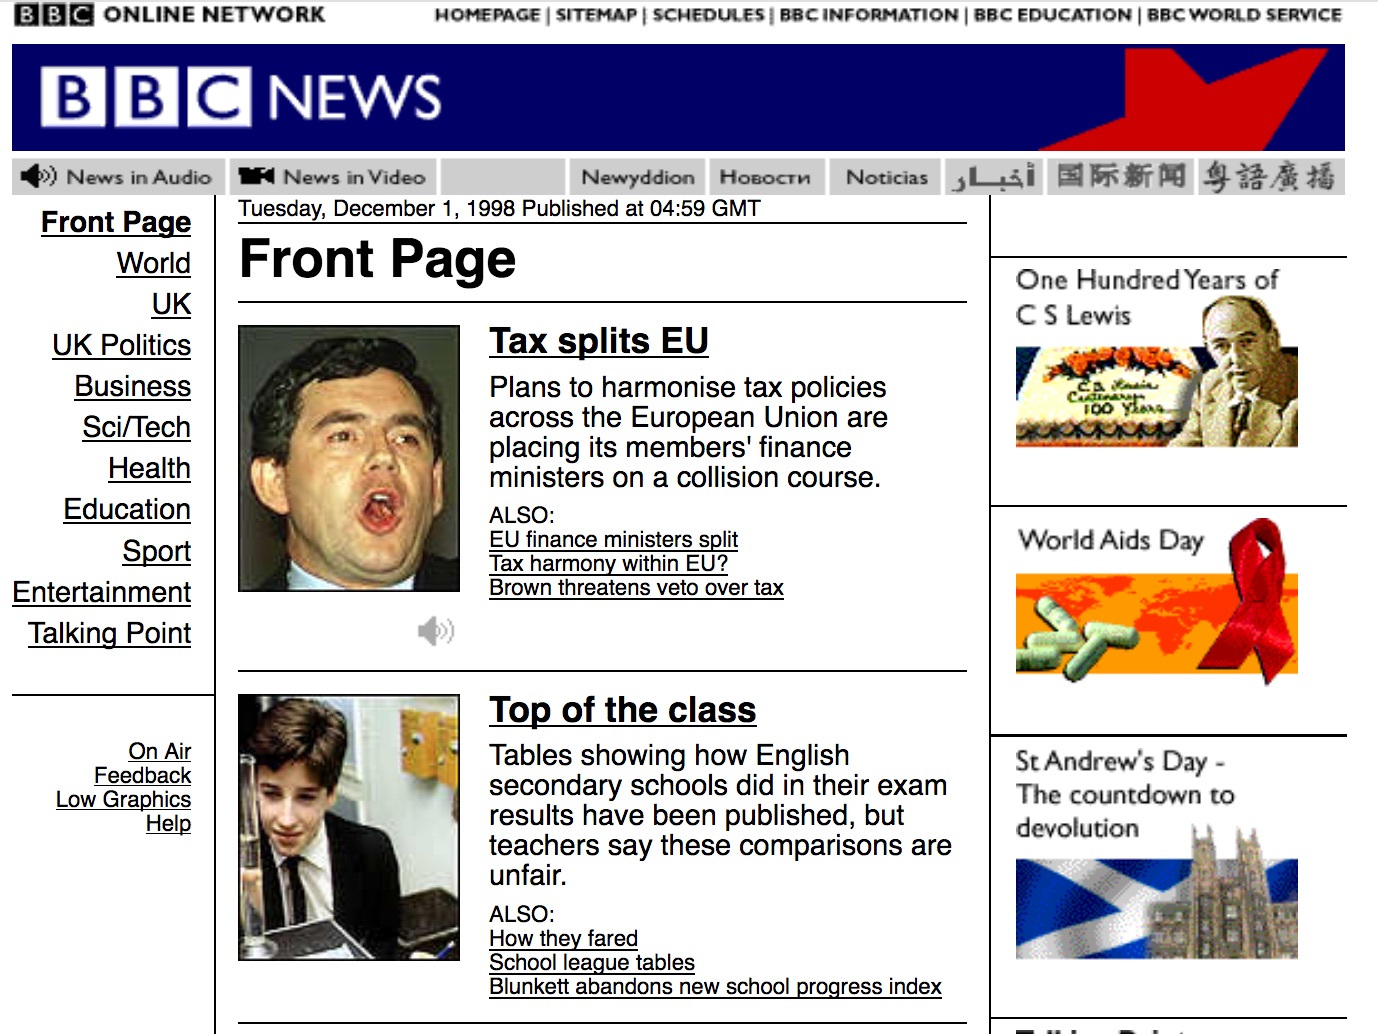 BBC.co.uk news homepage (1998)